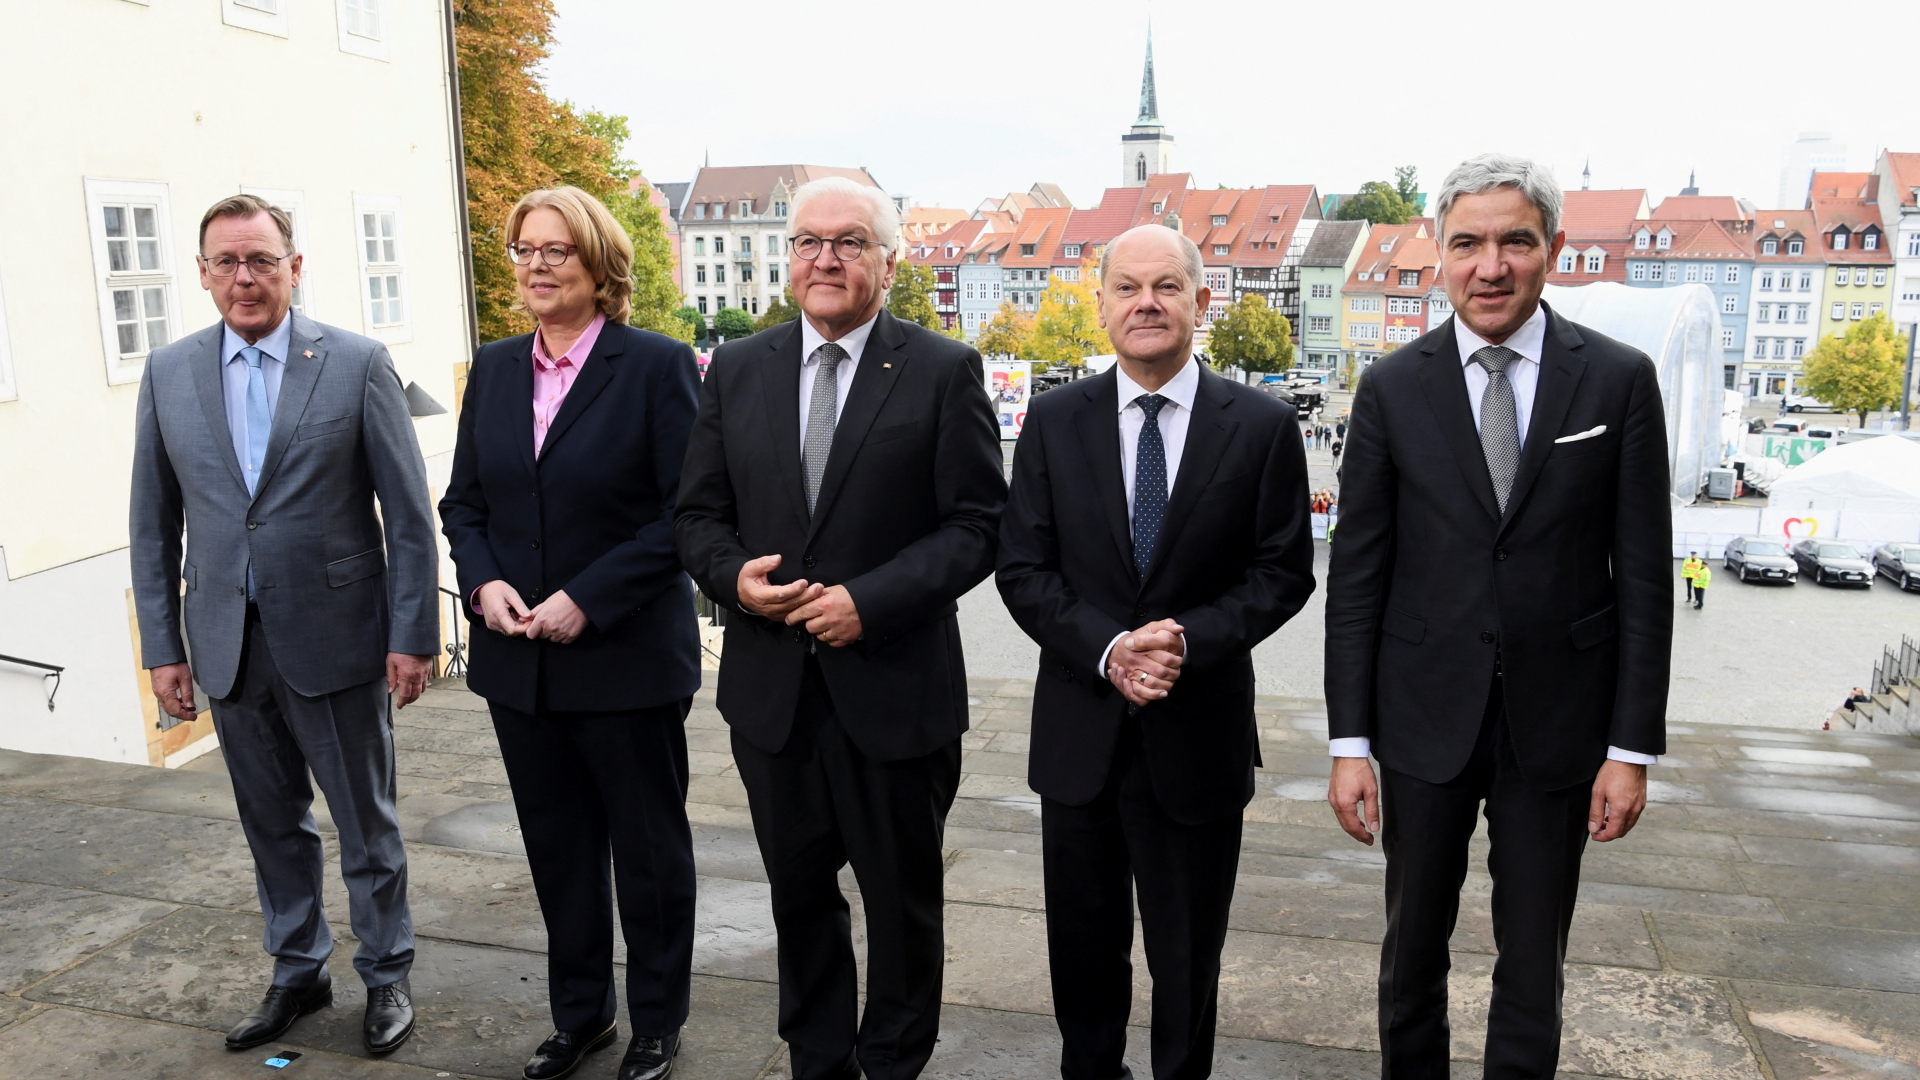 Bodo Ramelow, Bärbel Bas, Frank-Walter Steinmeier, Olaf Scholz and Stephan Harbarth vor dem Erfurter Dom | REUTERS